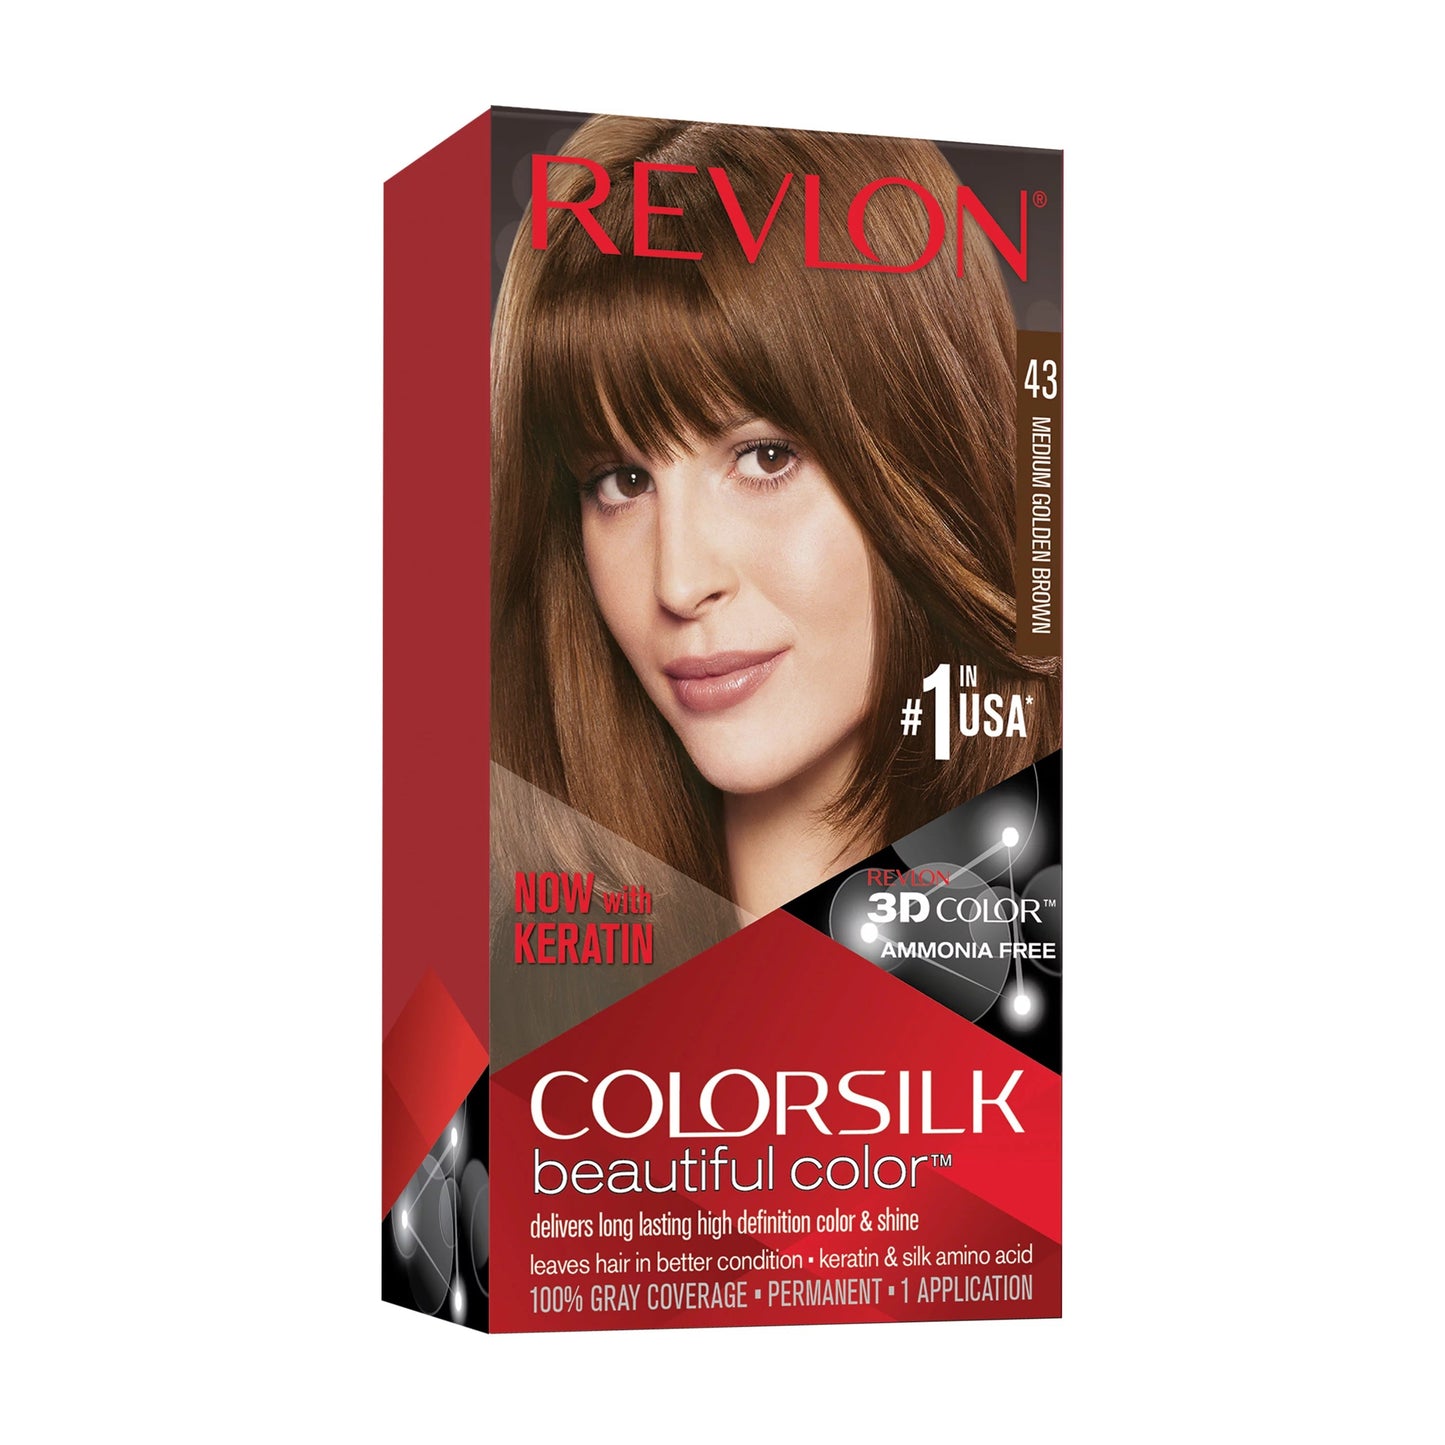 Revlon Colorsilk Hair Color 43 Medium Golden Brown USA - 1ct/3PK